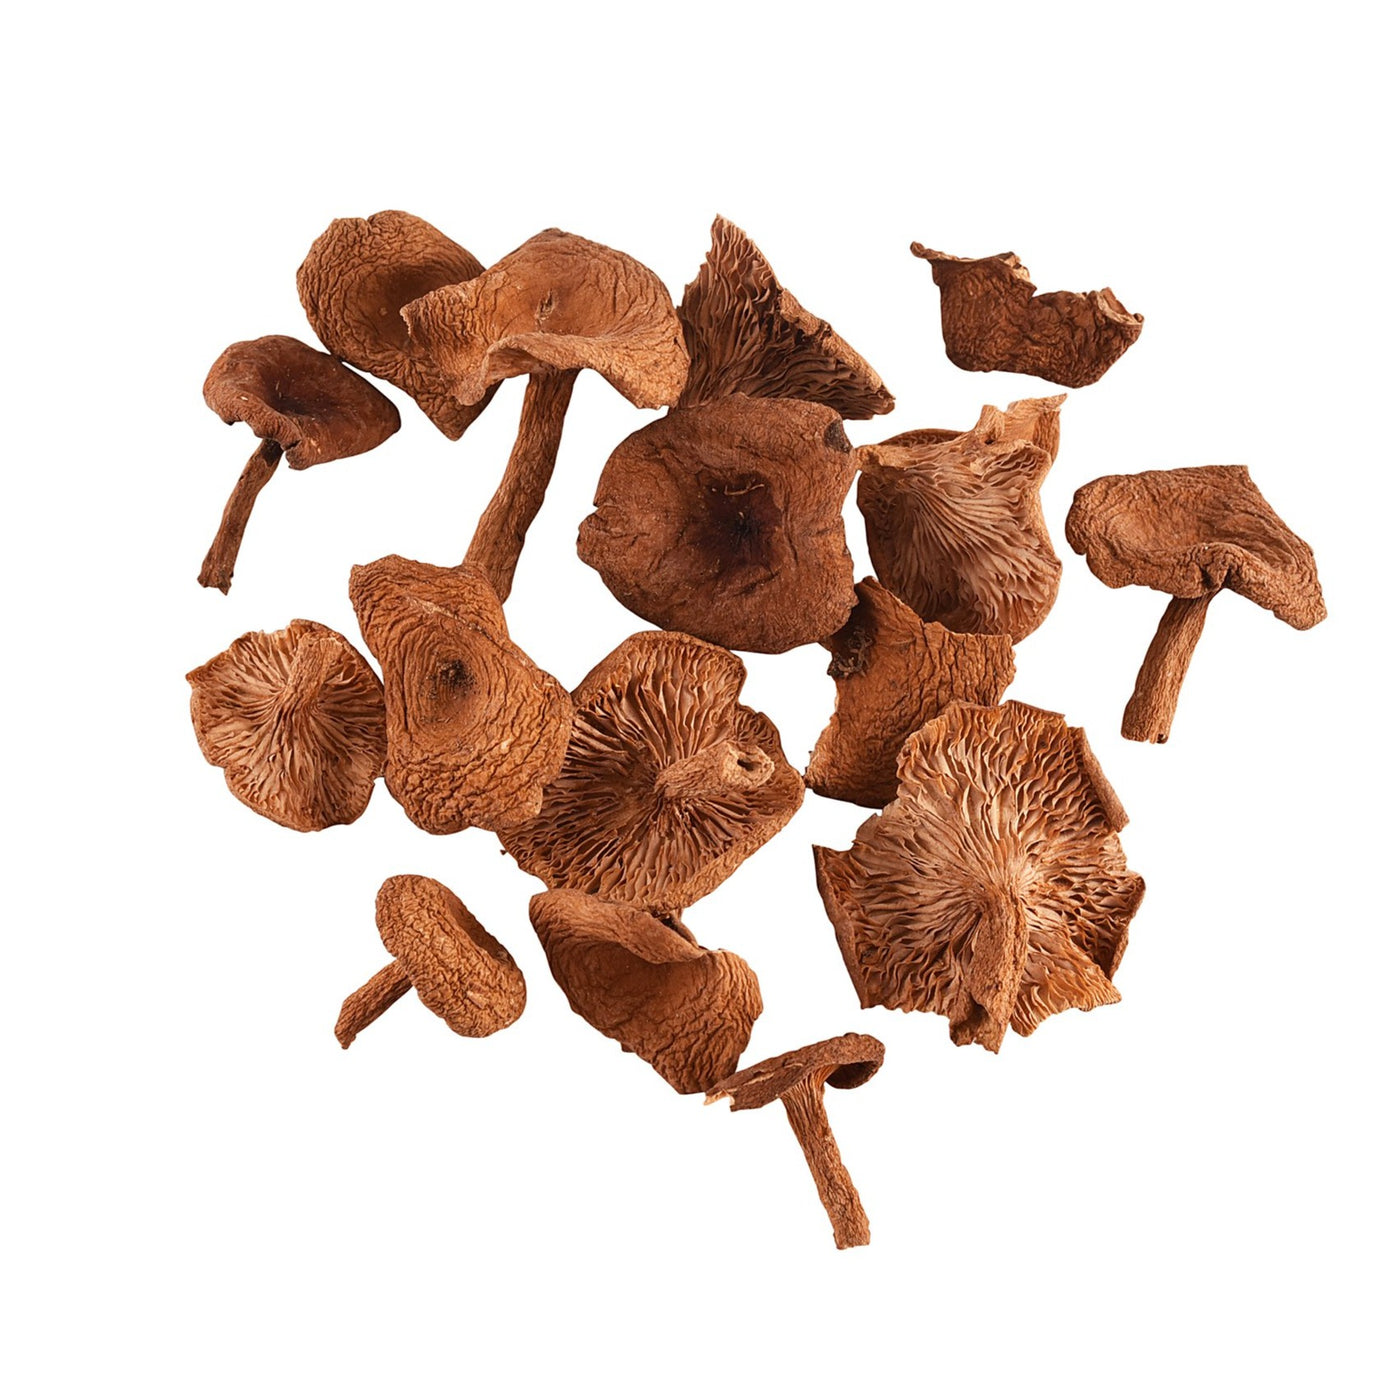 Wild Candy Cap Mushrooms - Sullivan Street Tea & Spice Company